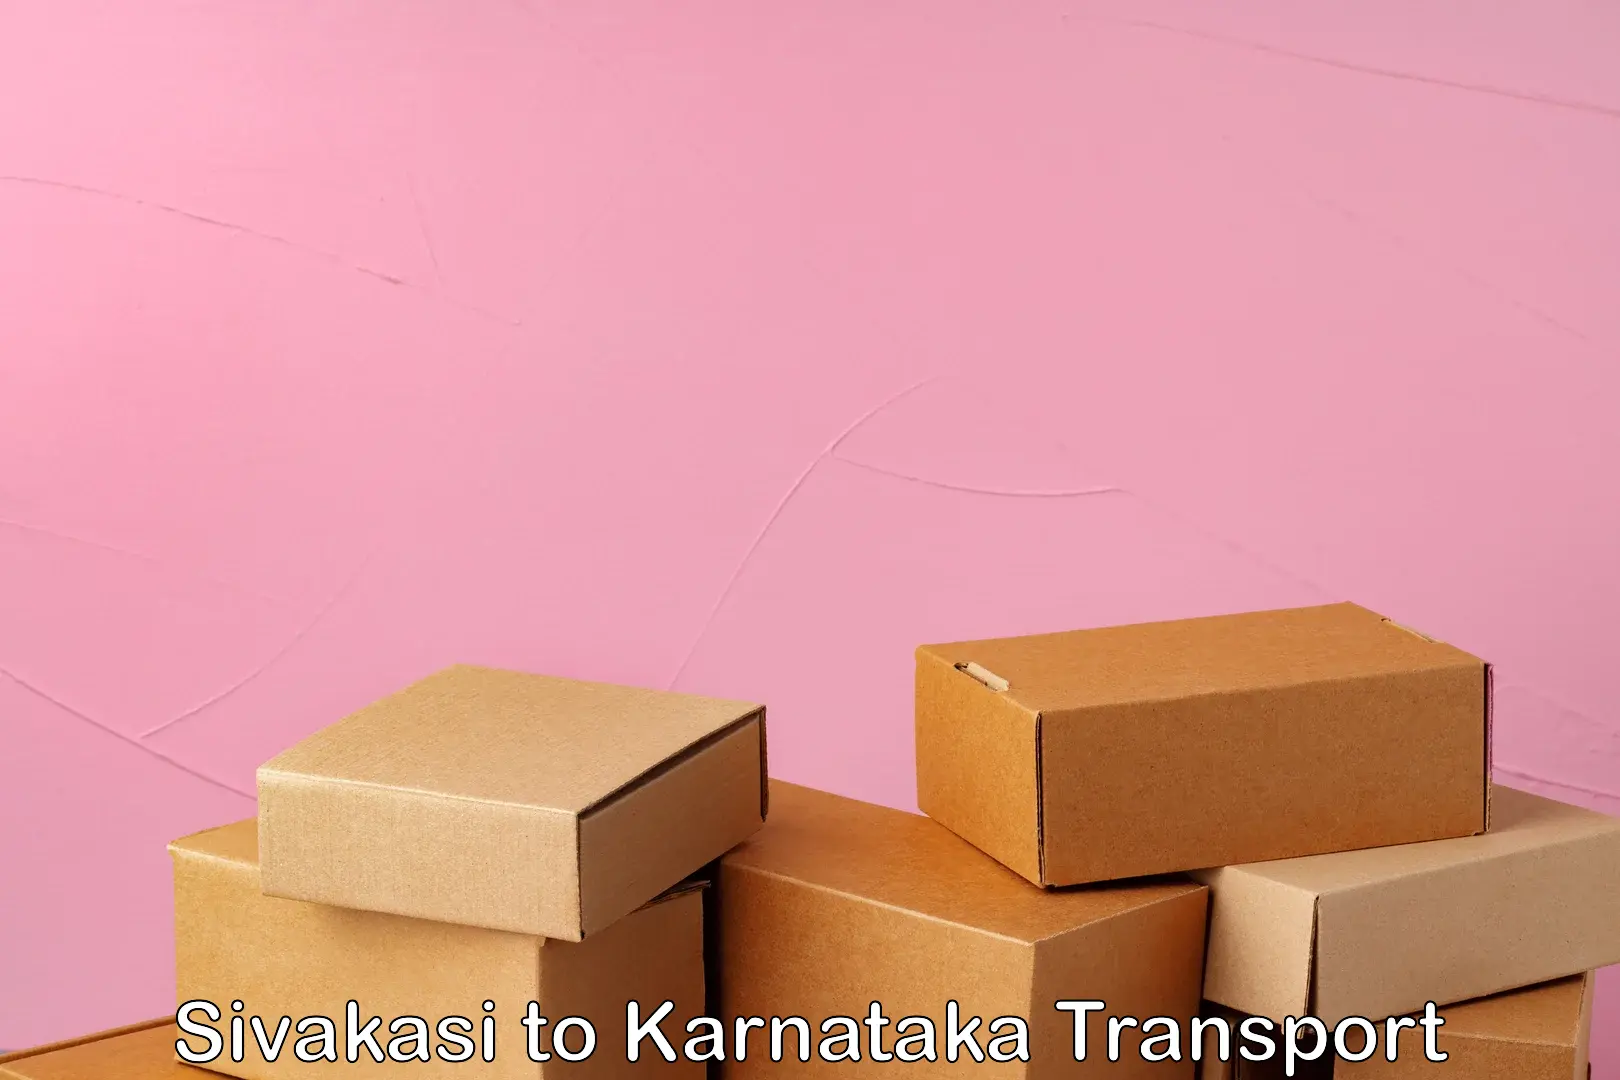 Container transport service Sivakasi to Karnataka